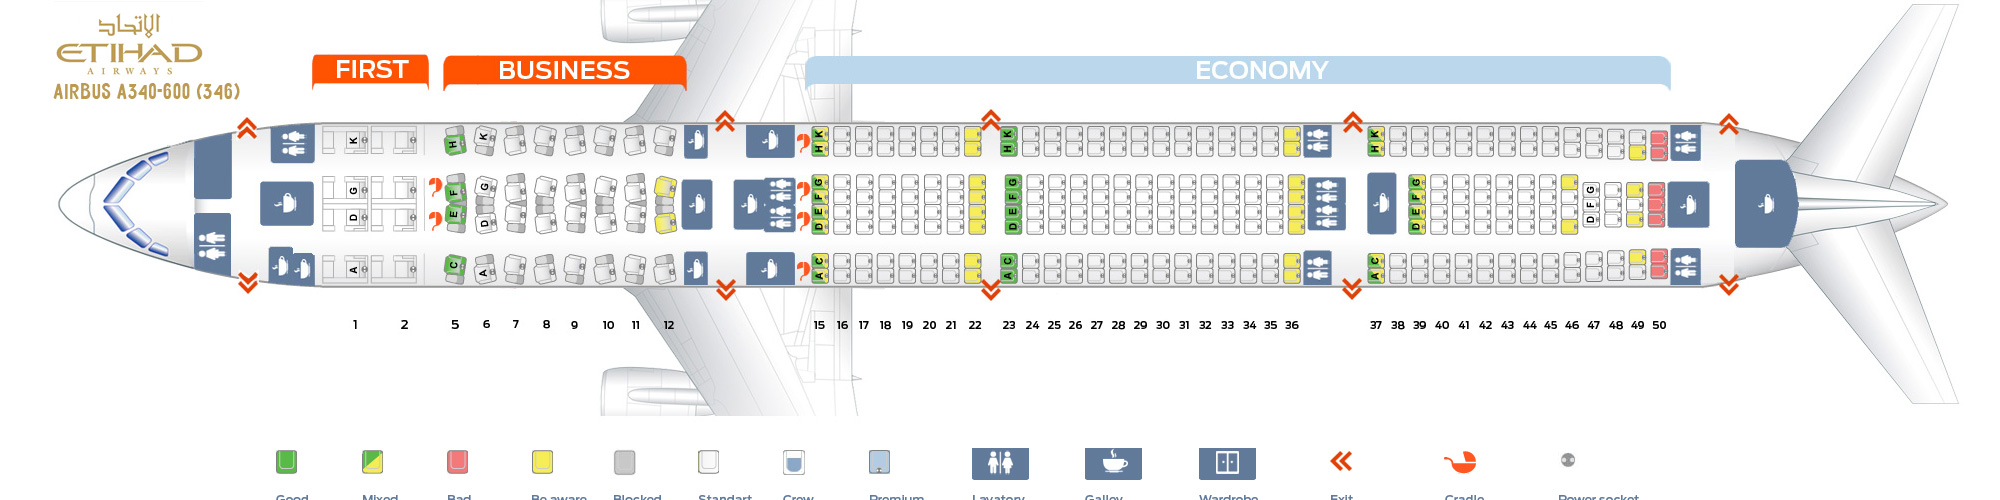 Airbus A340 600 Seating Chart Etihad